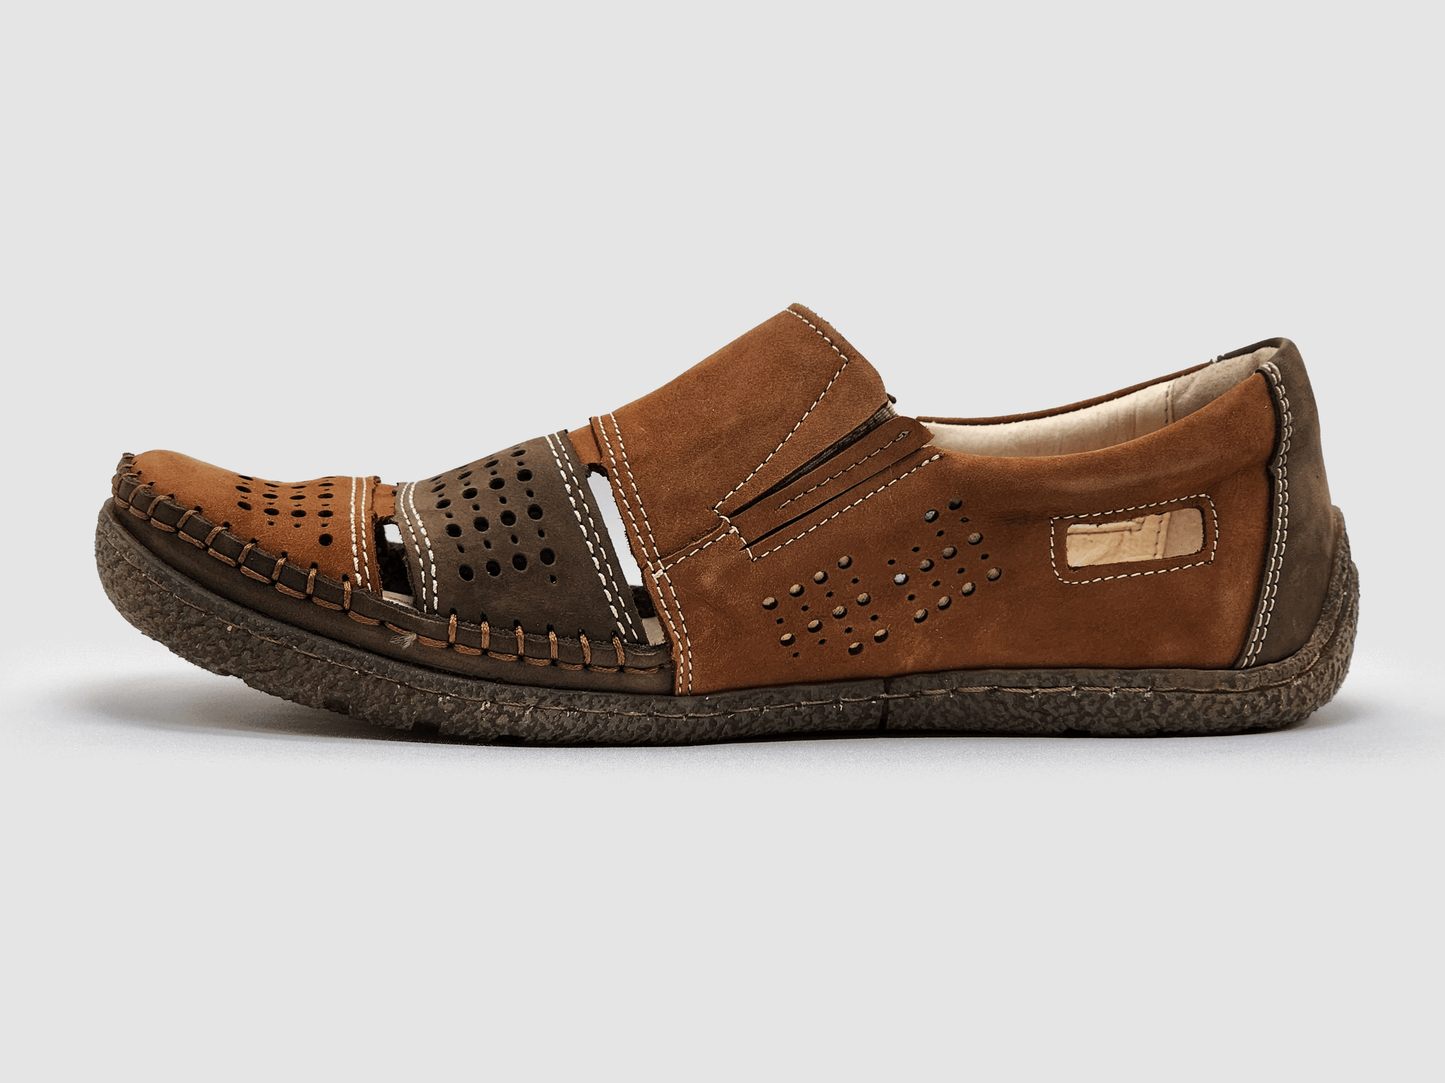 Men's Vacation Leather Sandals - Dark Brown - Kacper Global Shoes 